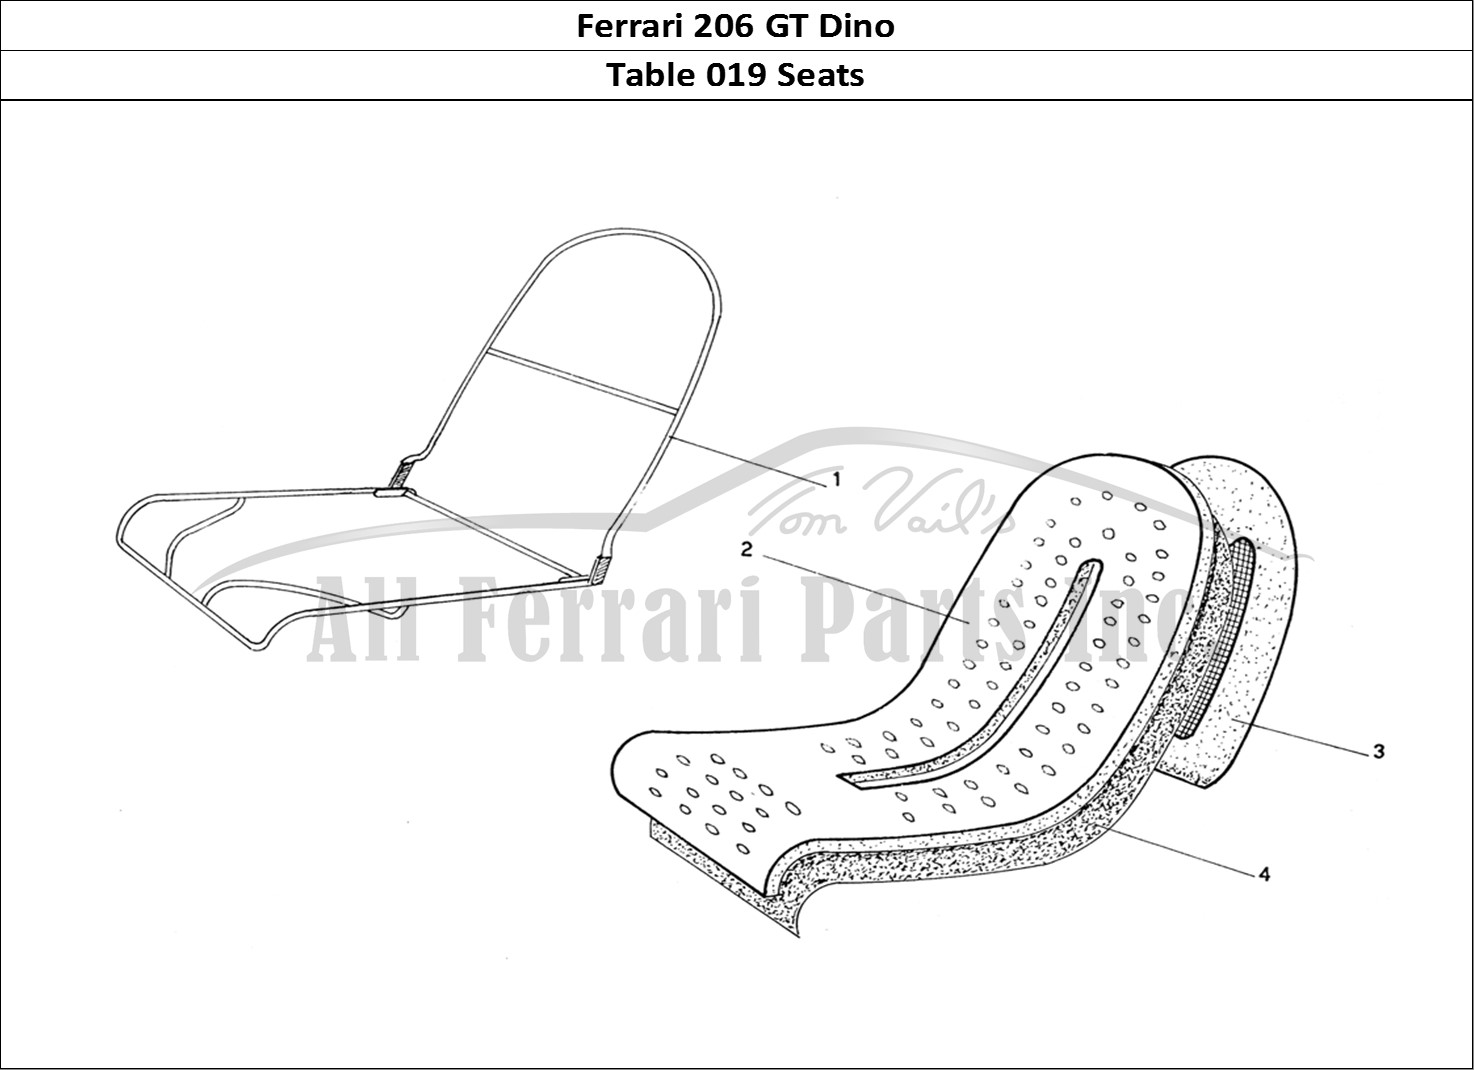 Ferrari Parts Ferrari 206 GT Dino (Coachwork) Page 019 Seat Frames